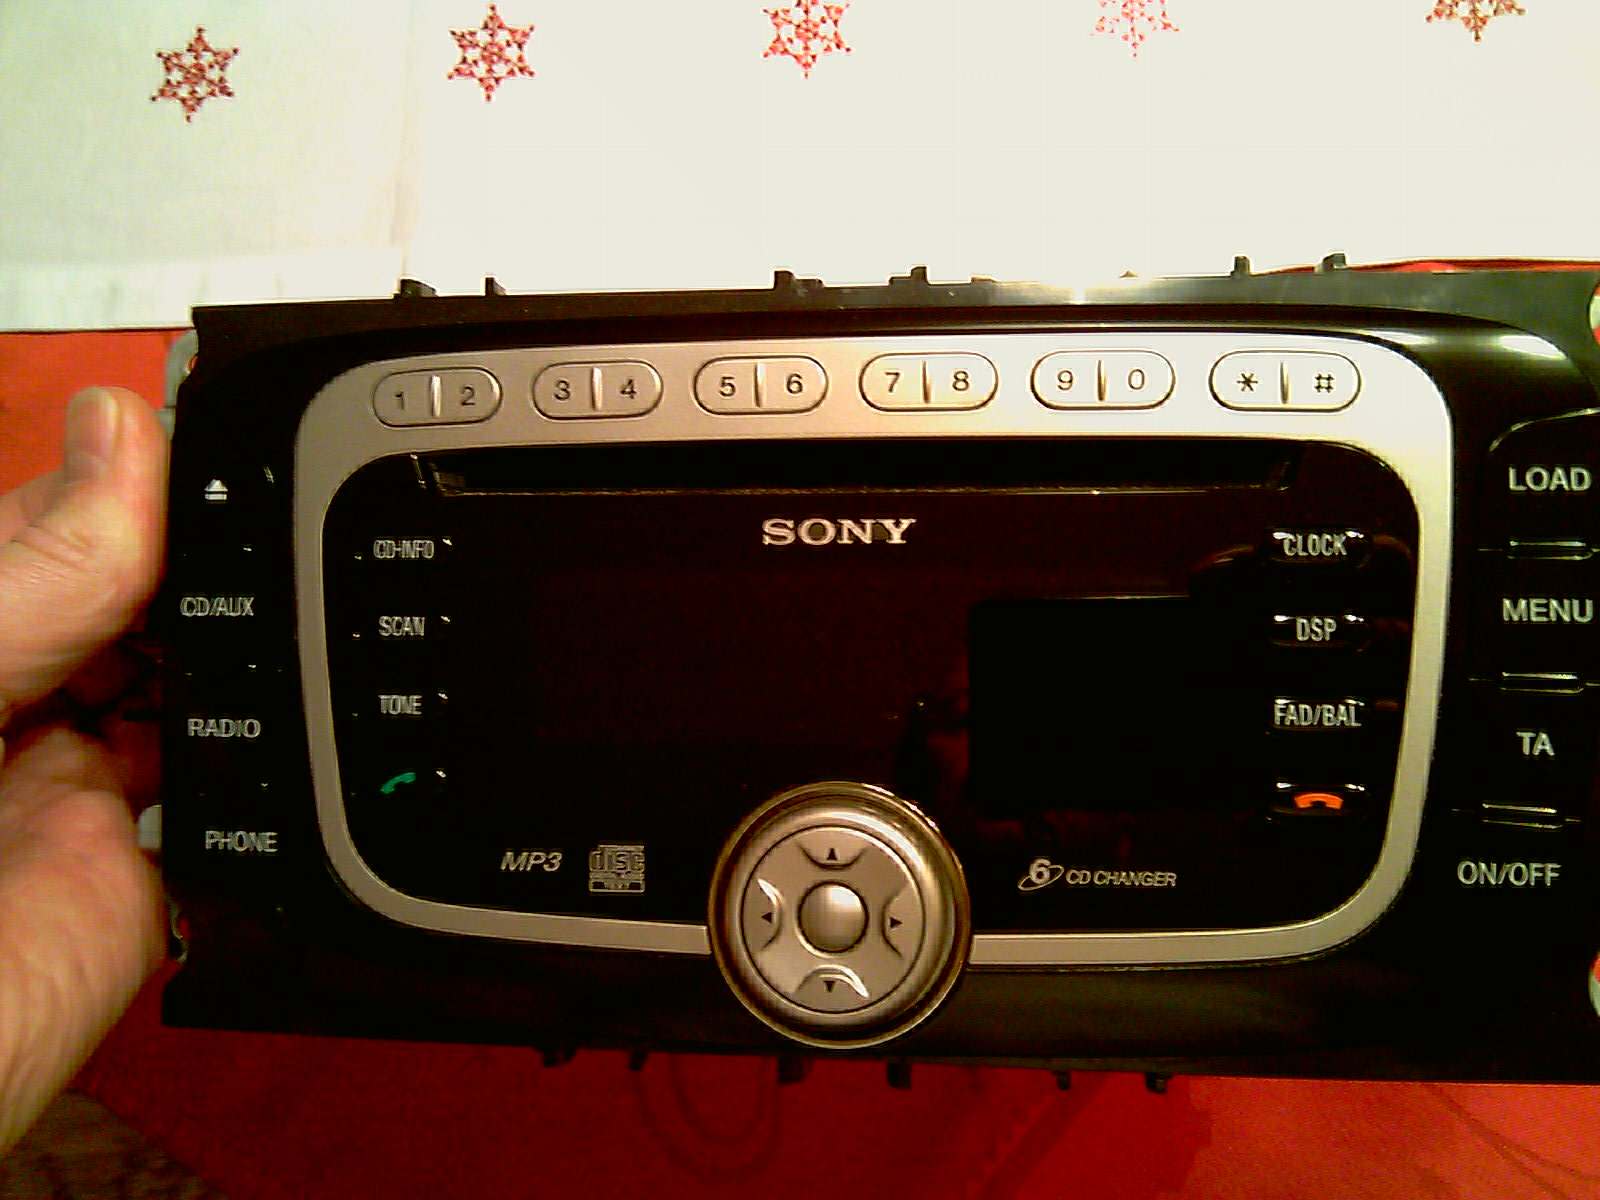 Ford s-max sony radio bedienungsanleitung #7